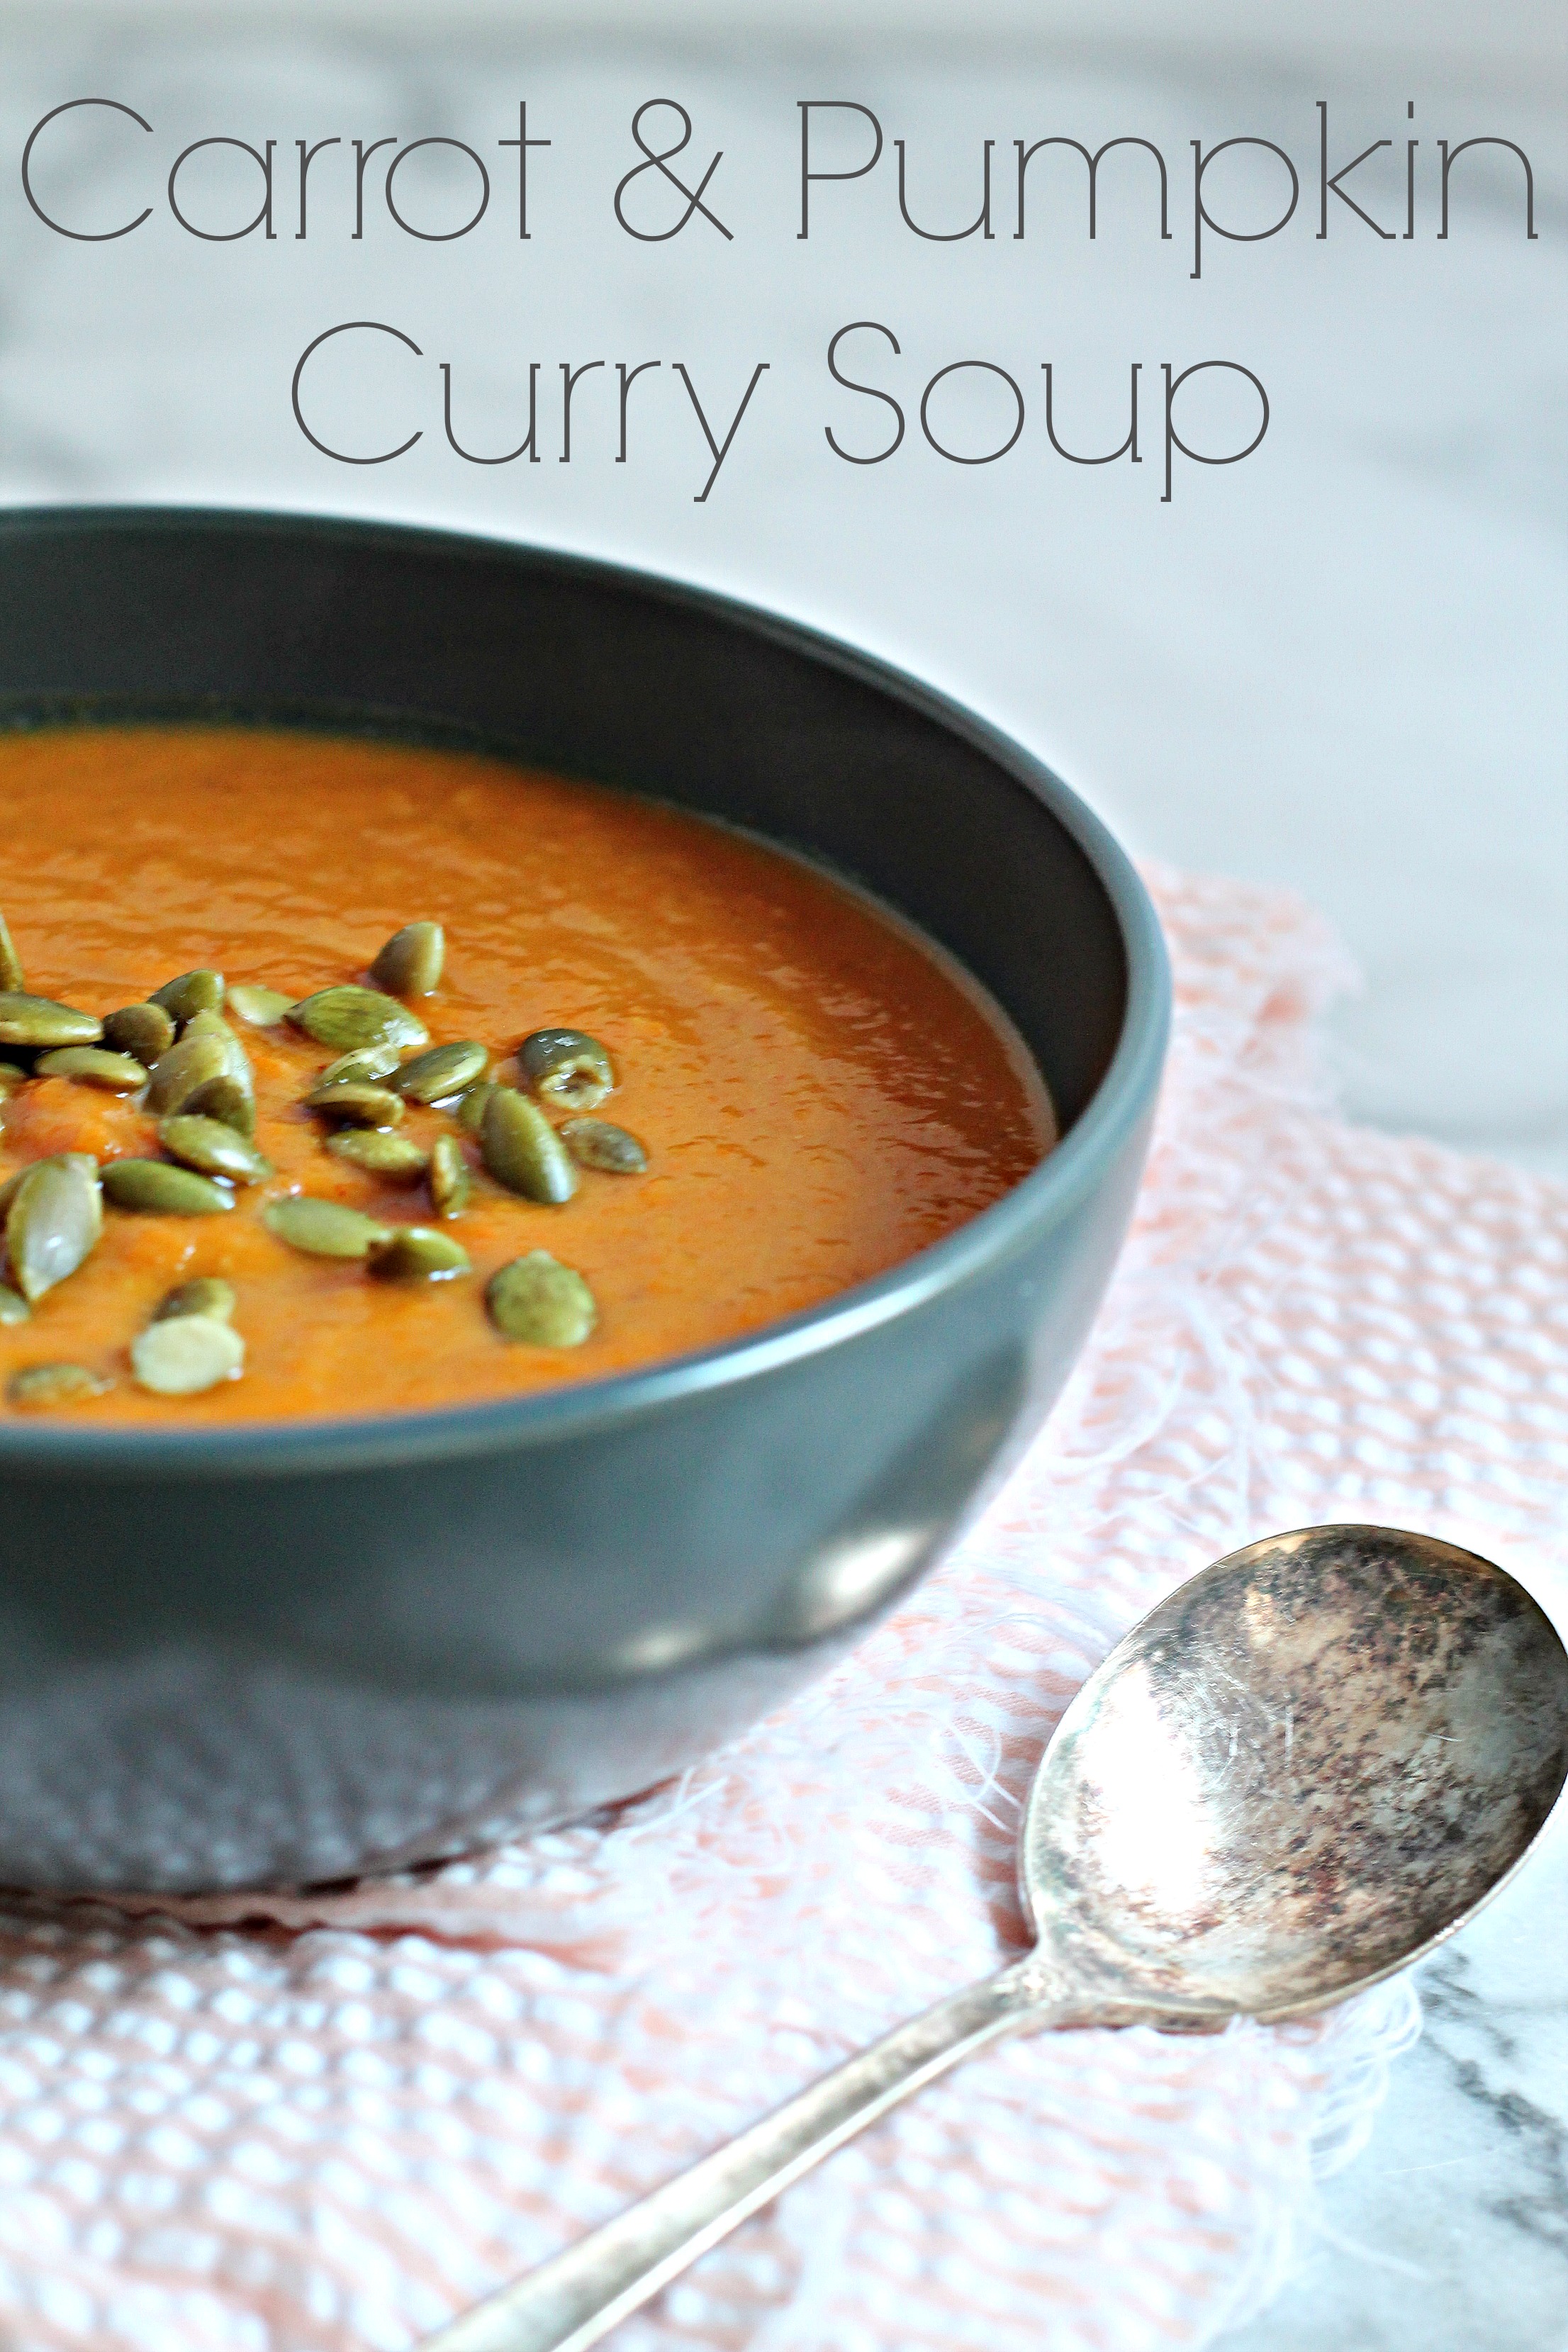 https://www.cookingwithbooks.net/wp-content/uploads/2014/12/Carrot-Pumpkin-Curry-Soup-2.jpg